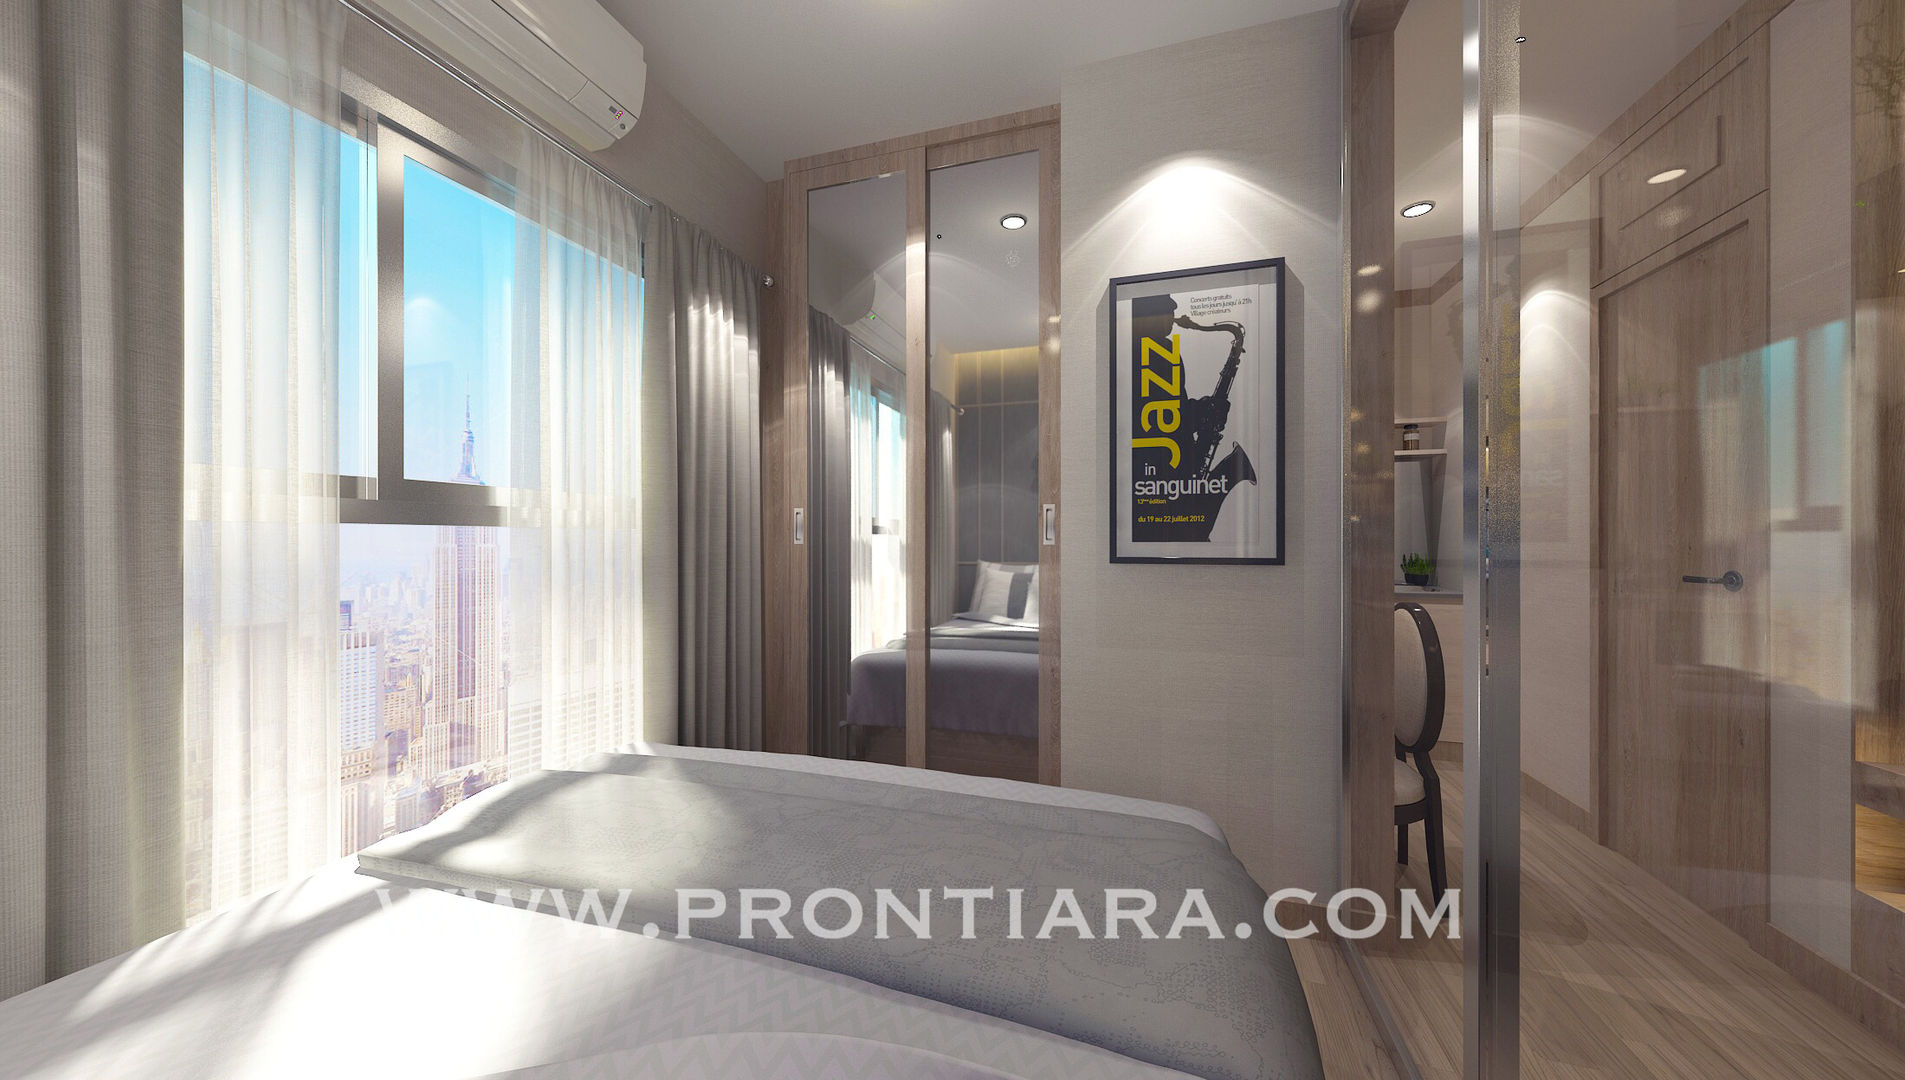 Plum condo 22.5 start 150,000฿ ออกแบบและตกแต่งภายใน, Prontiara Prontiara Modern Bedroom